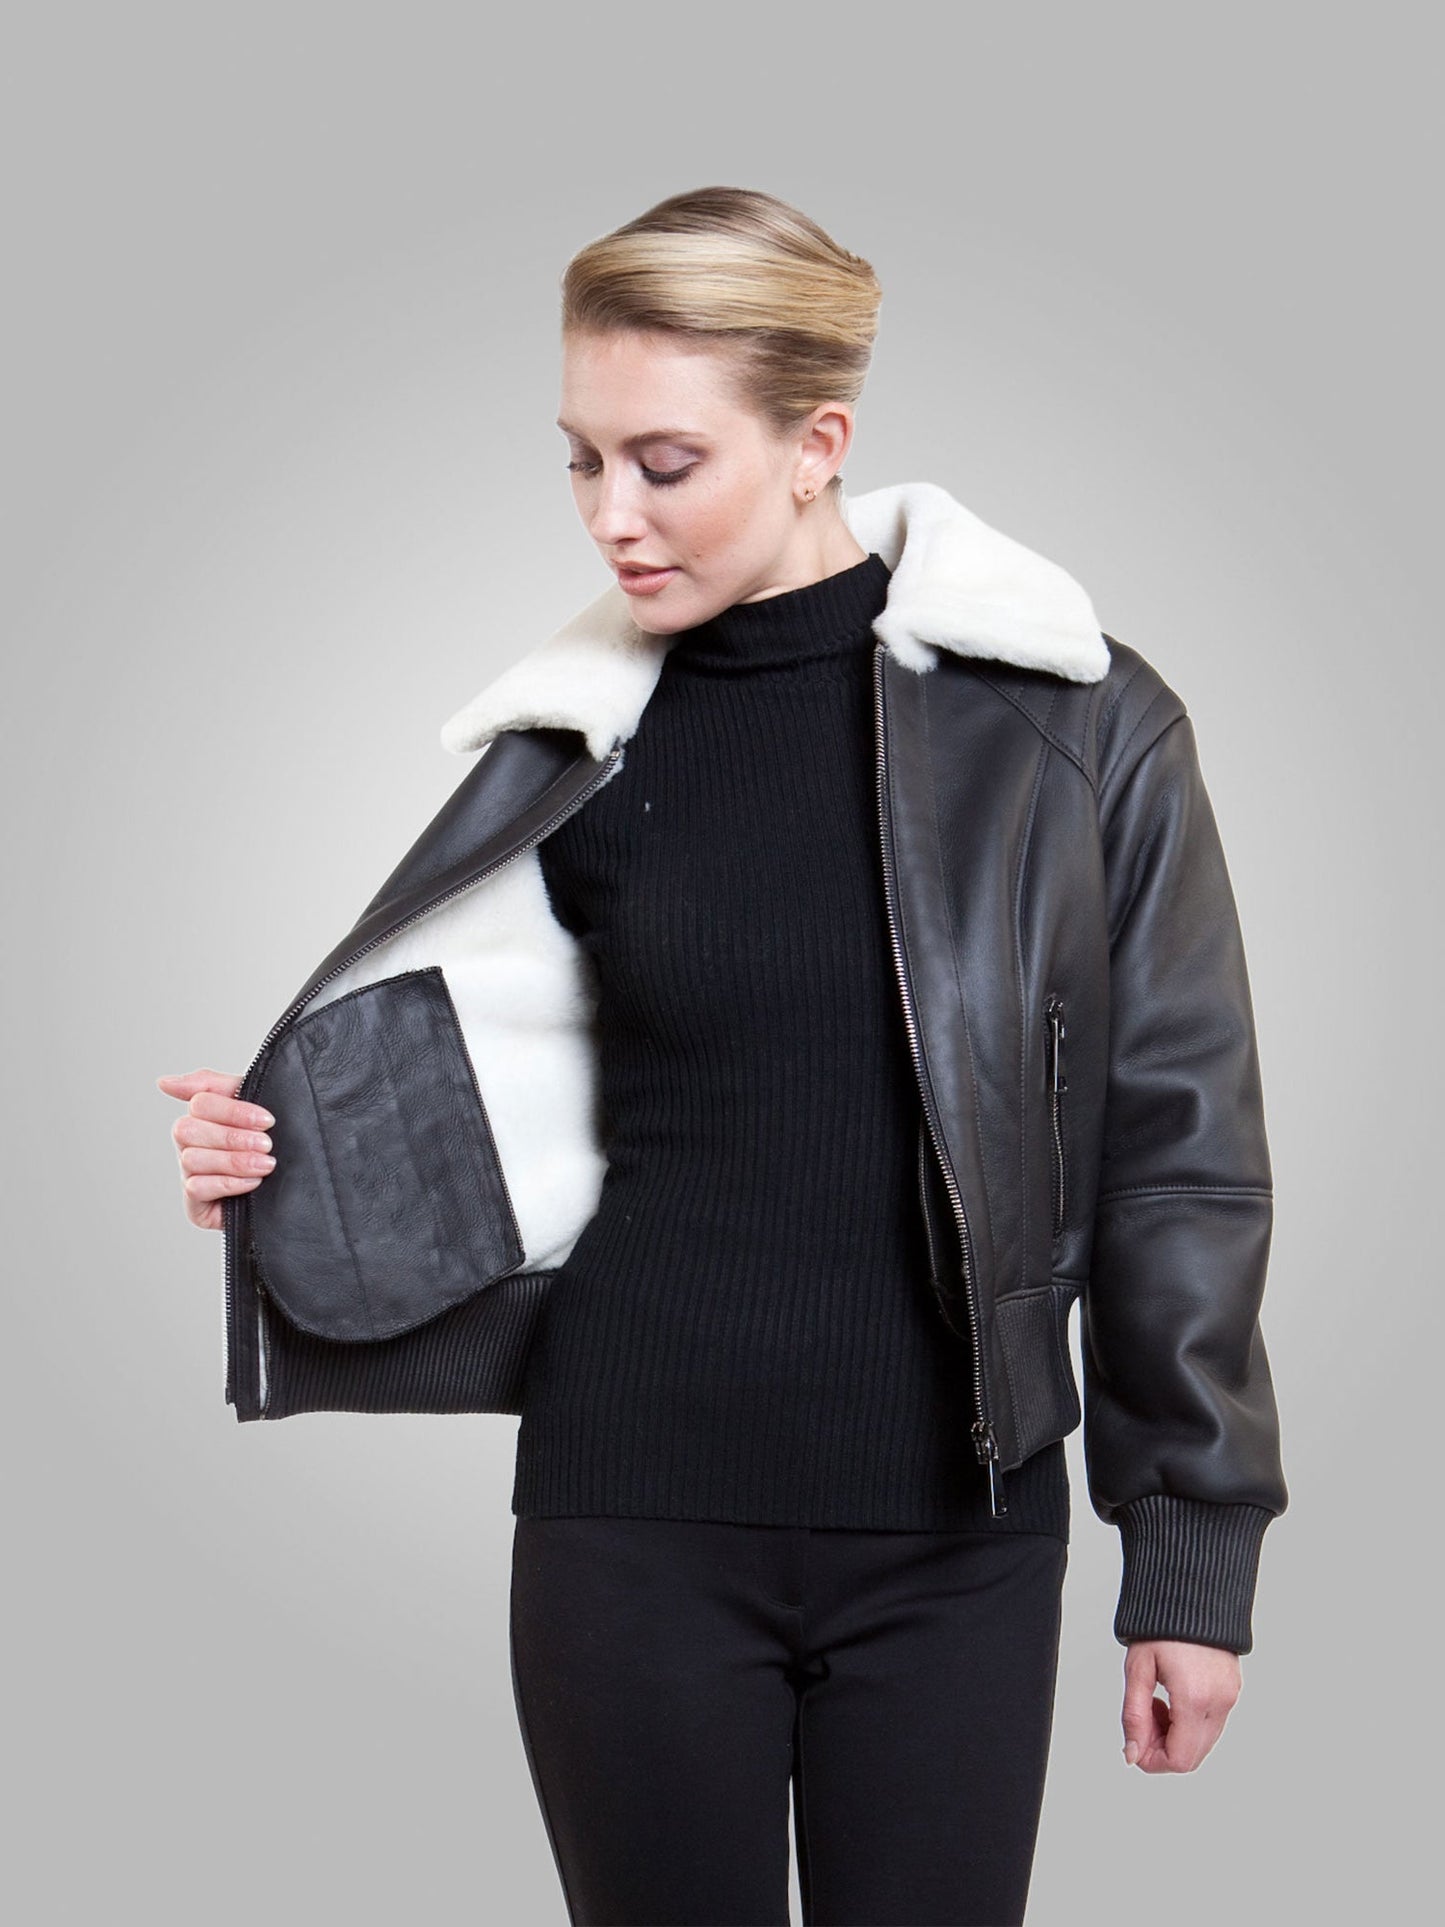 Women’s Black Leather White Shearling Bomber Jacket